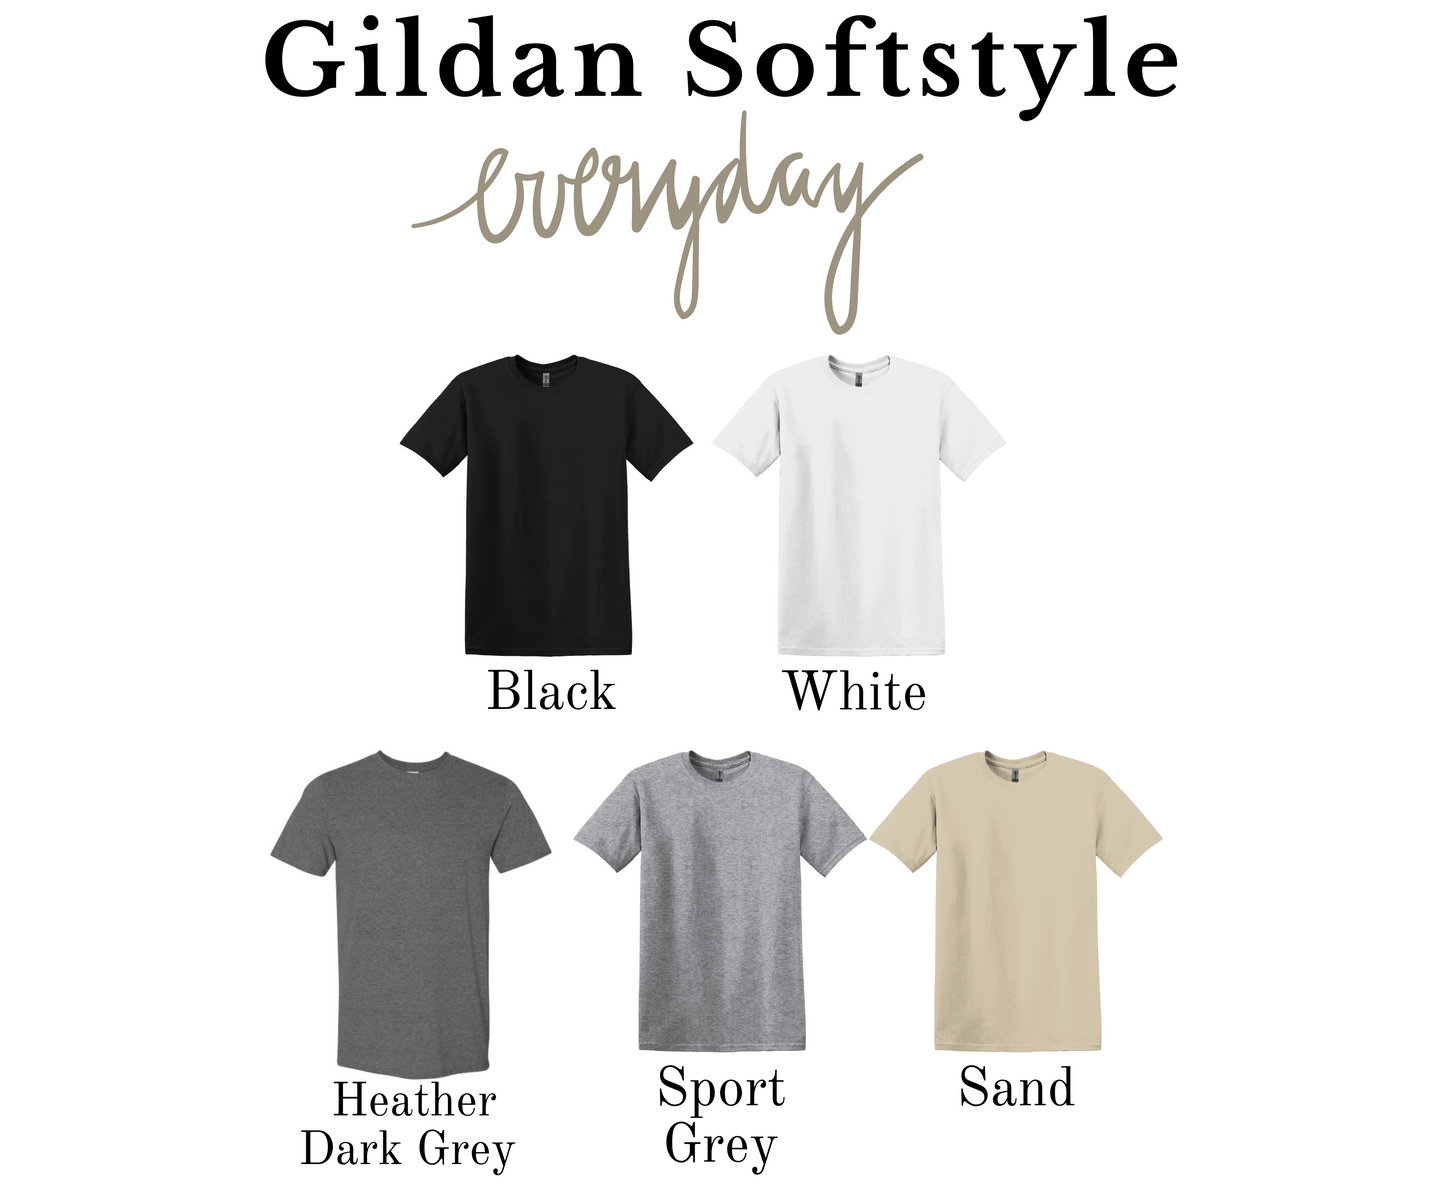 December 25 Christmas Gildan Softstyle T-shirt